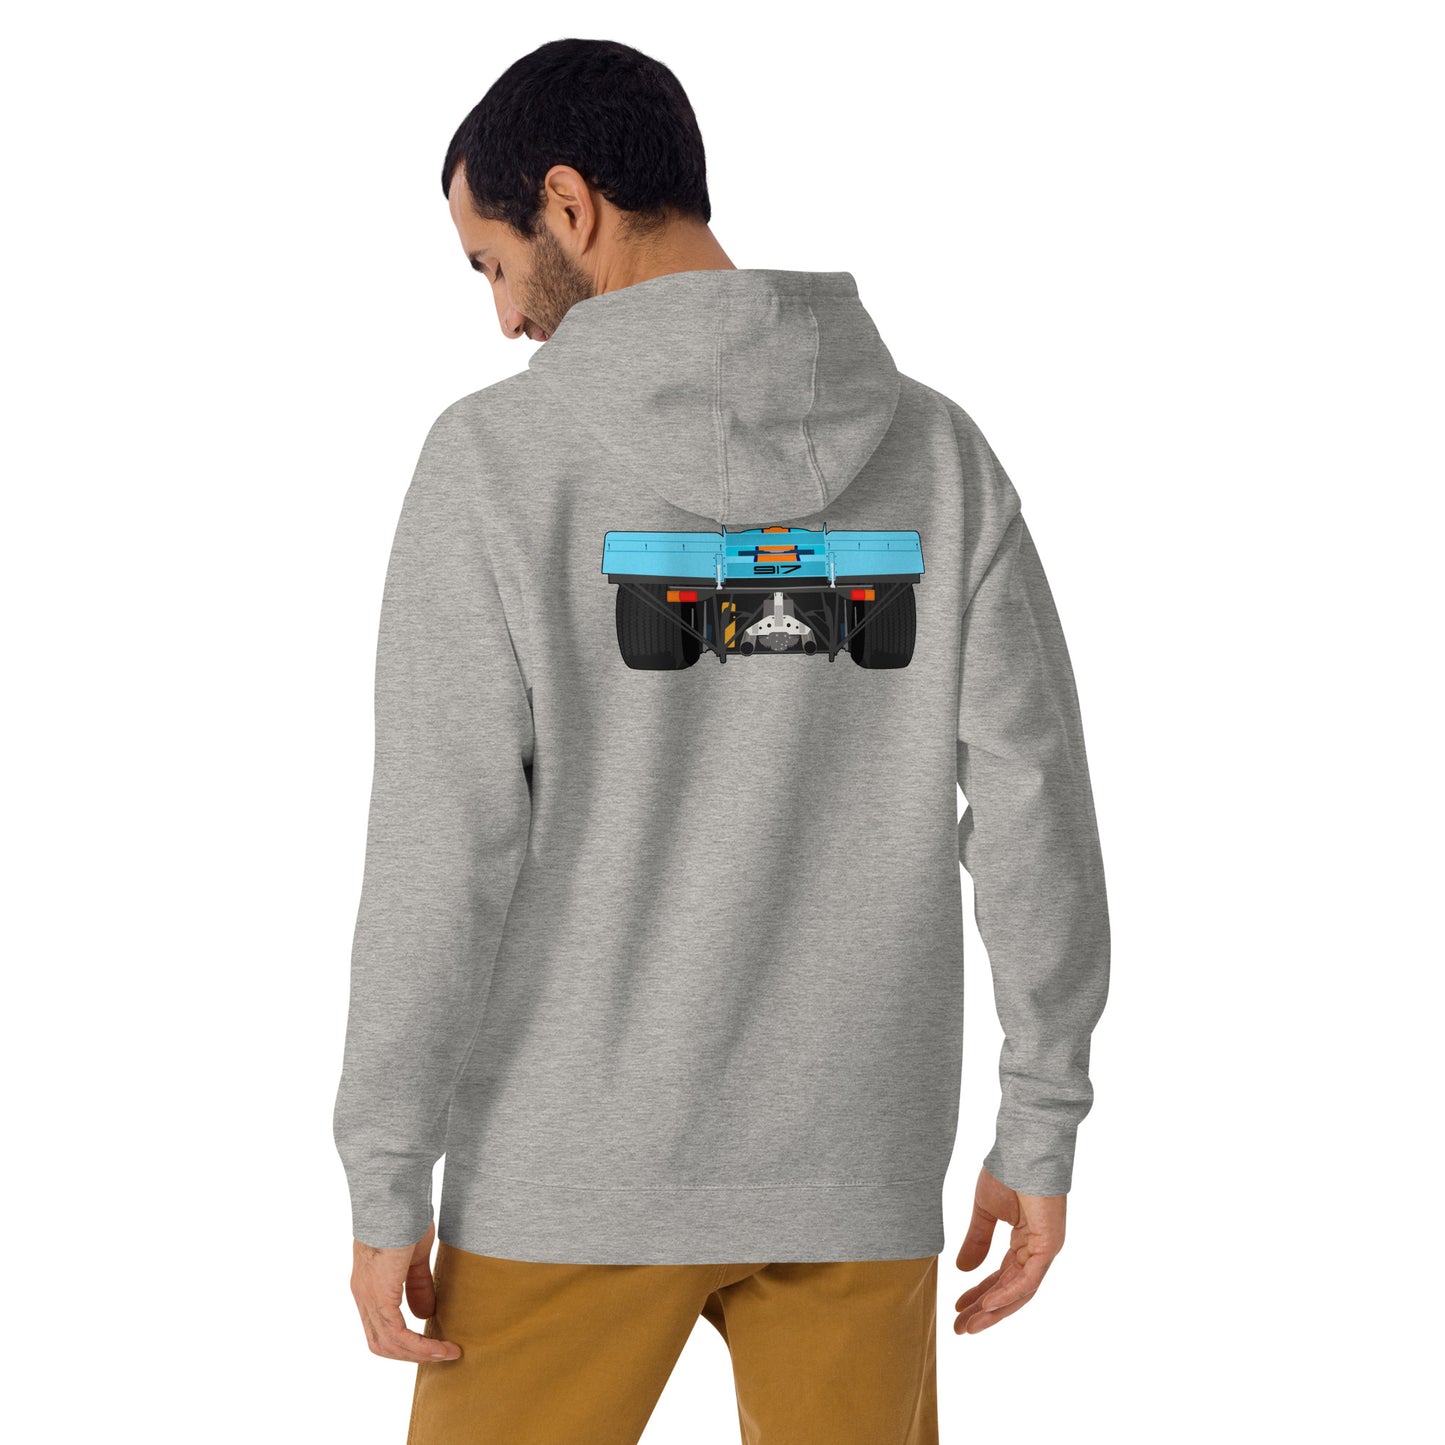 Unisex Hooded Sweatshirt 917 "Garage Days" 1 of 100